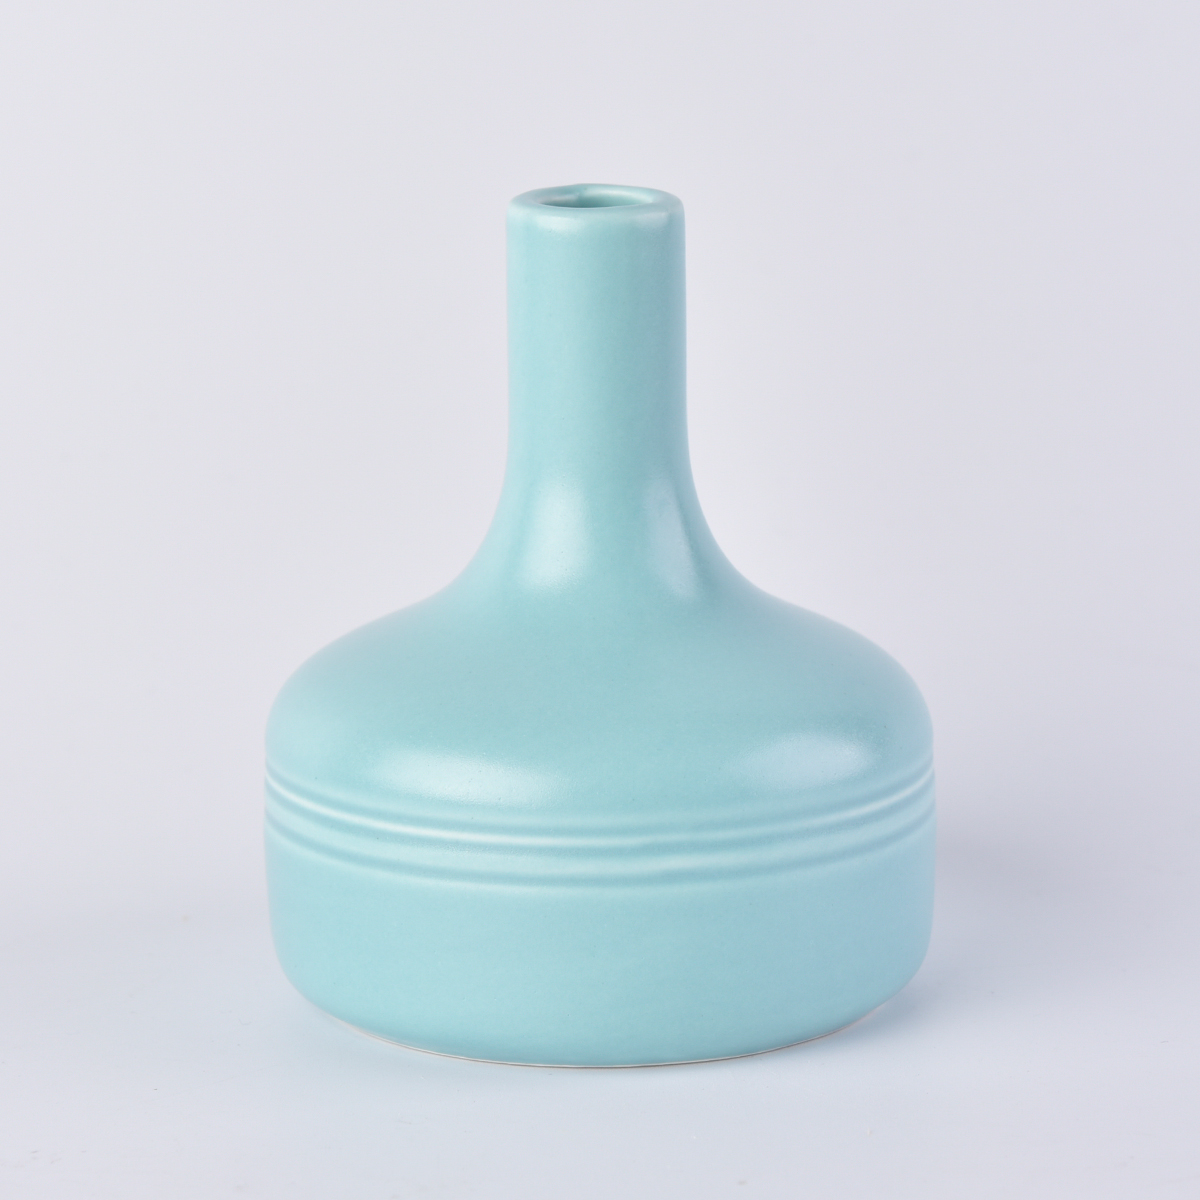 200ml Macarons Ceramic Diffuser Bottles Home Decor